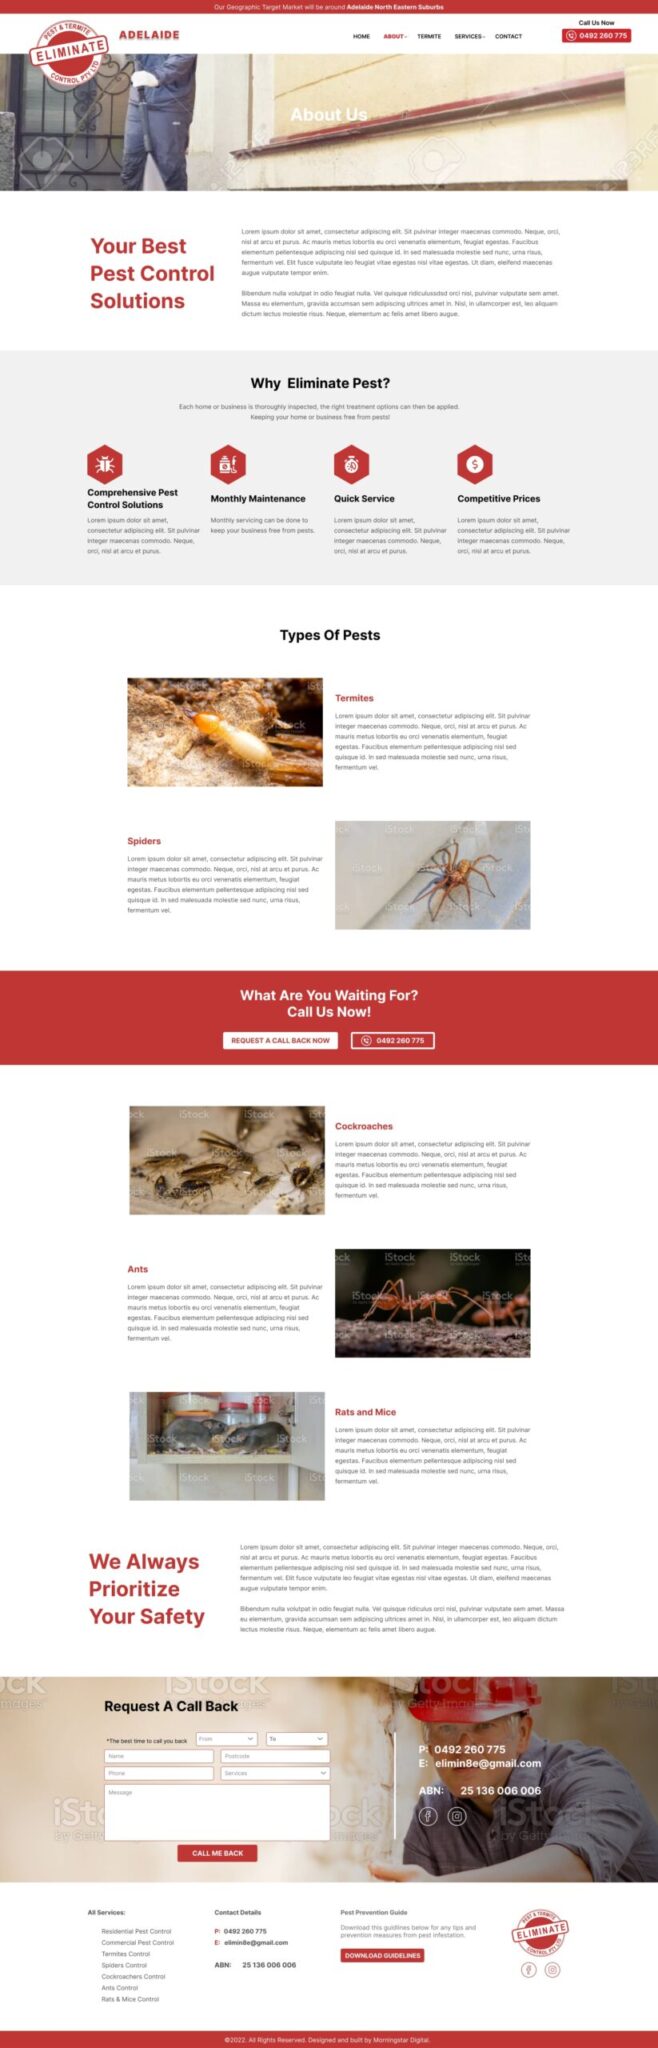 Eliminate Pest & Termite Control About